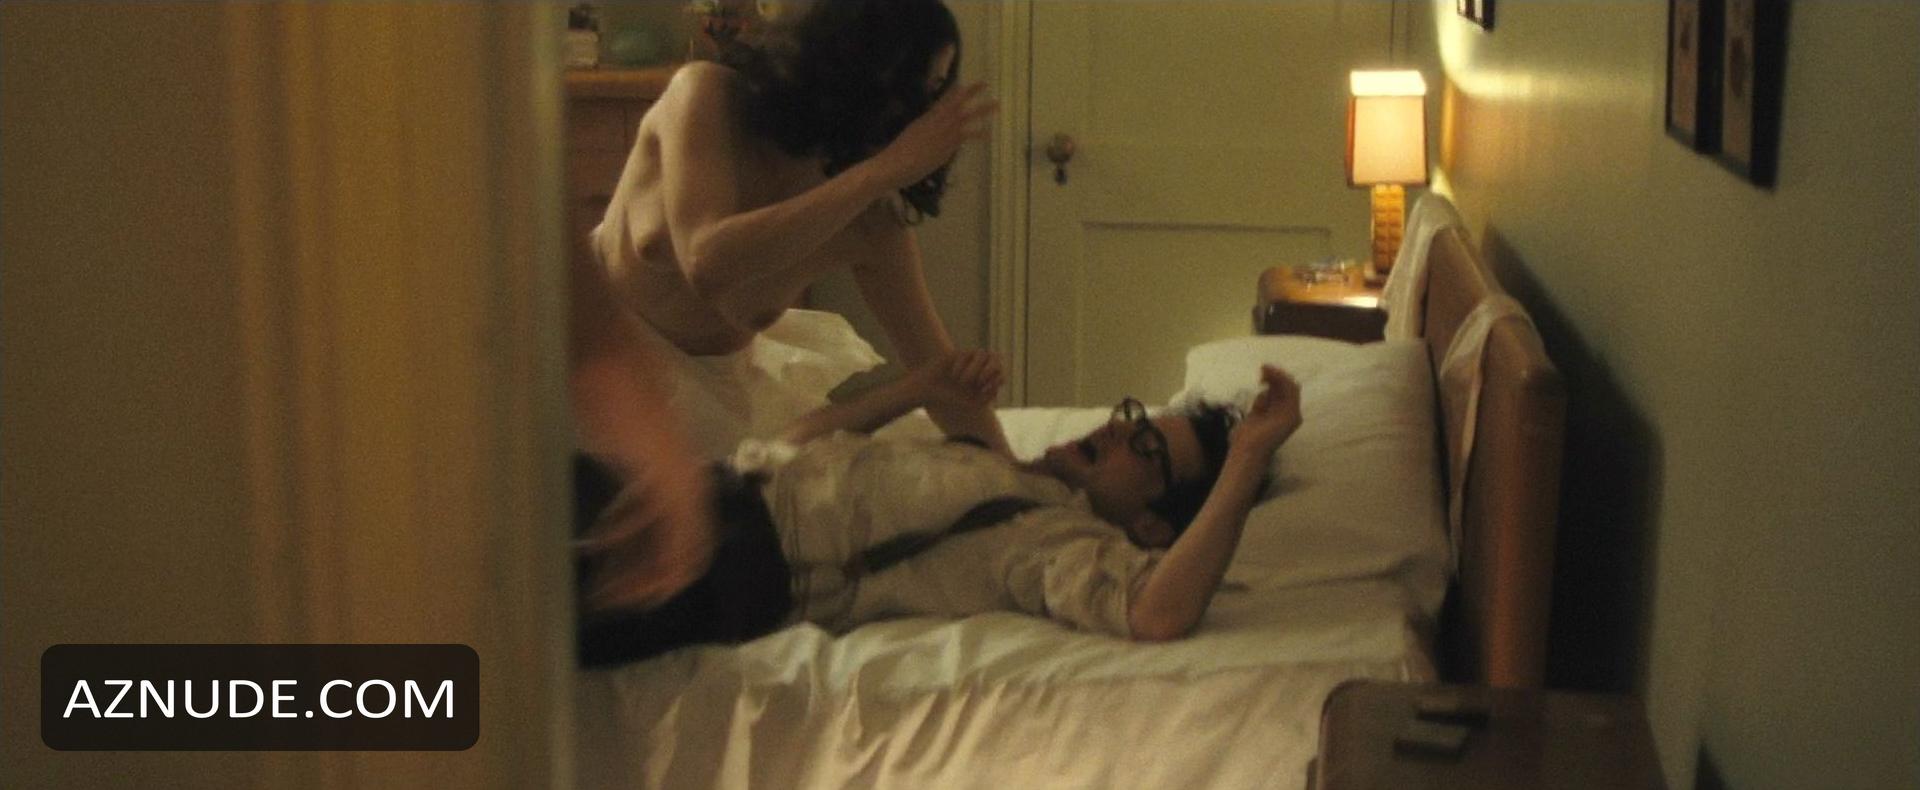 Best Sharon Stone Nude Images Scenes